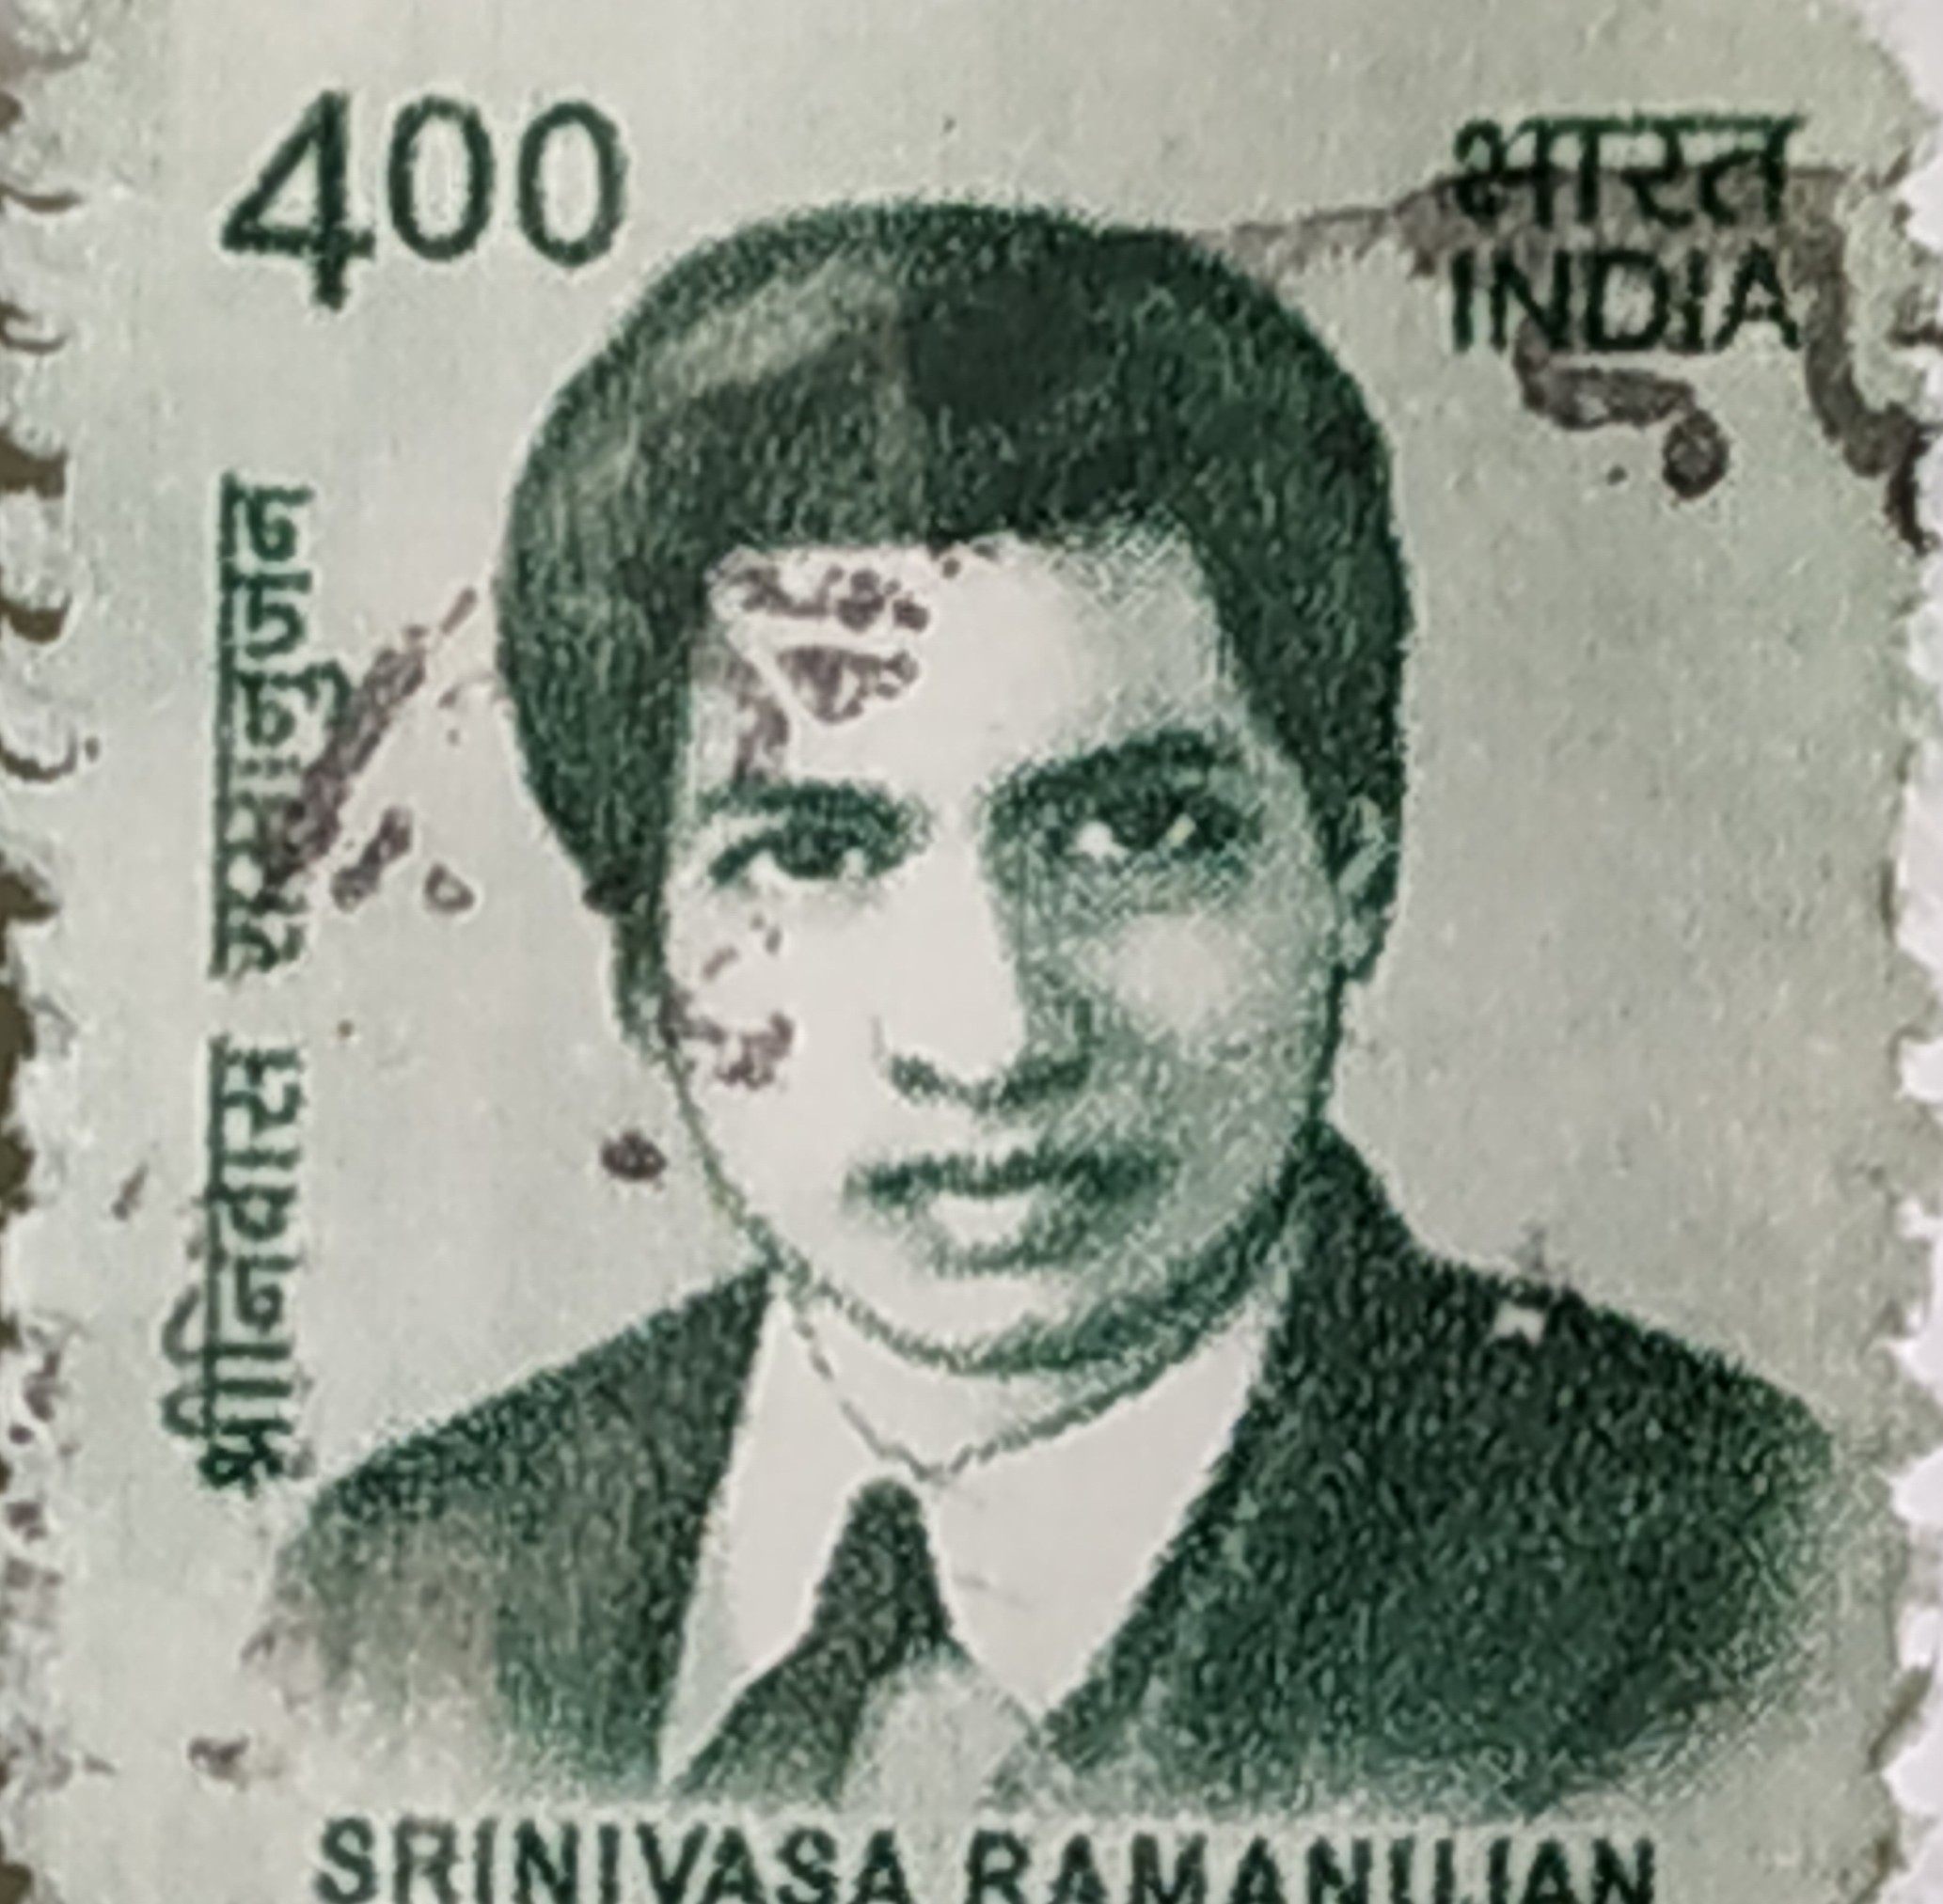 Srinivasa Ramanujan, Indian stamp, postal stamp, mathematician, Indian Rupees, numismatics, philately, commemorative stamp, portrait, currency, mathematics, historical figure.